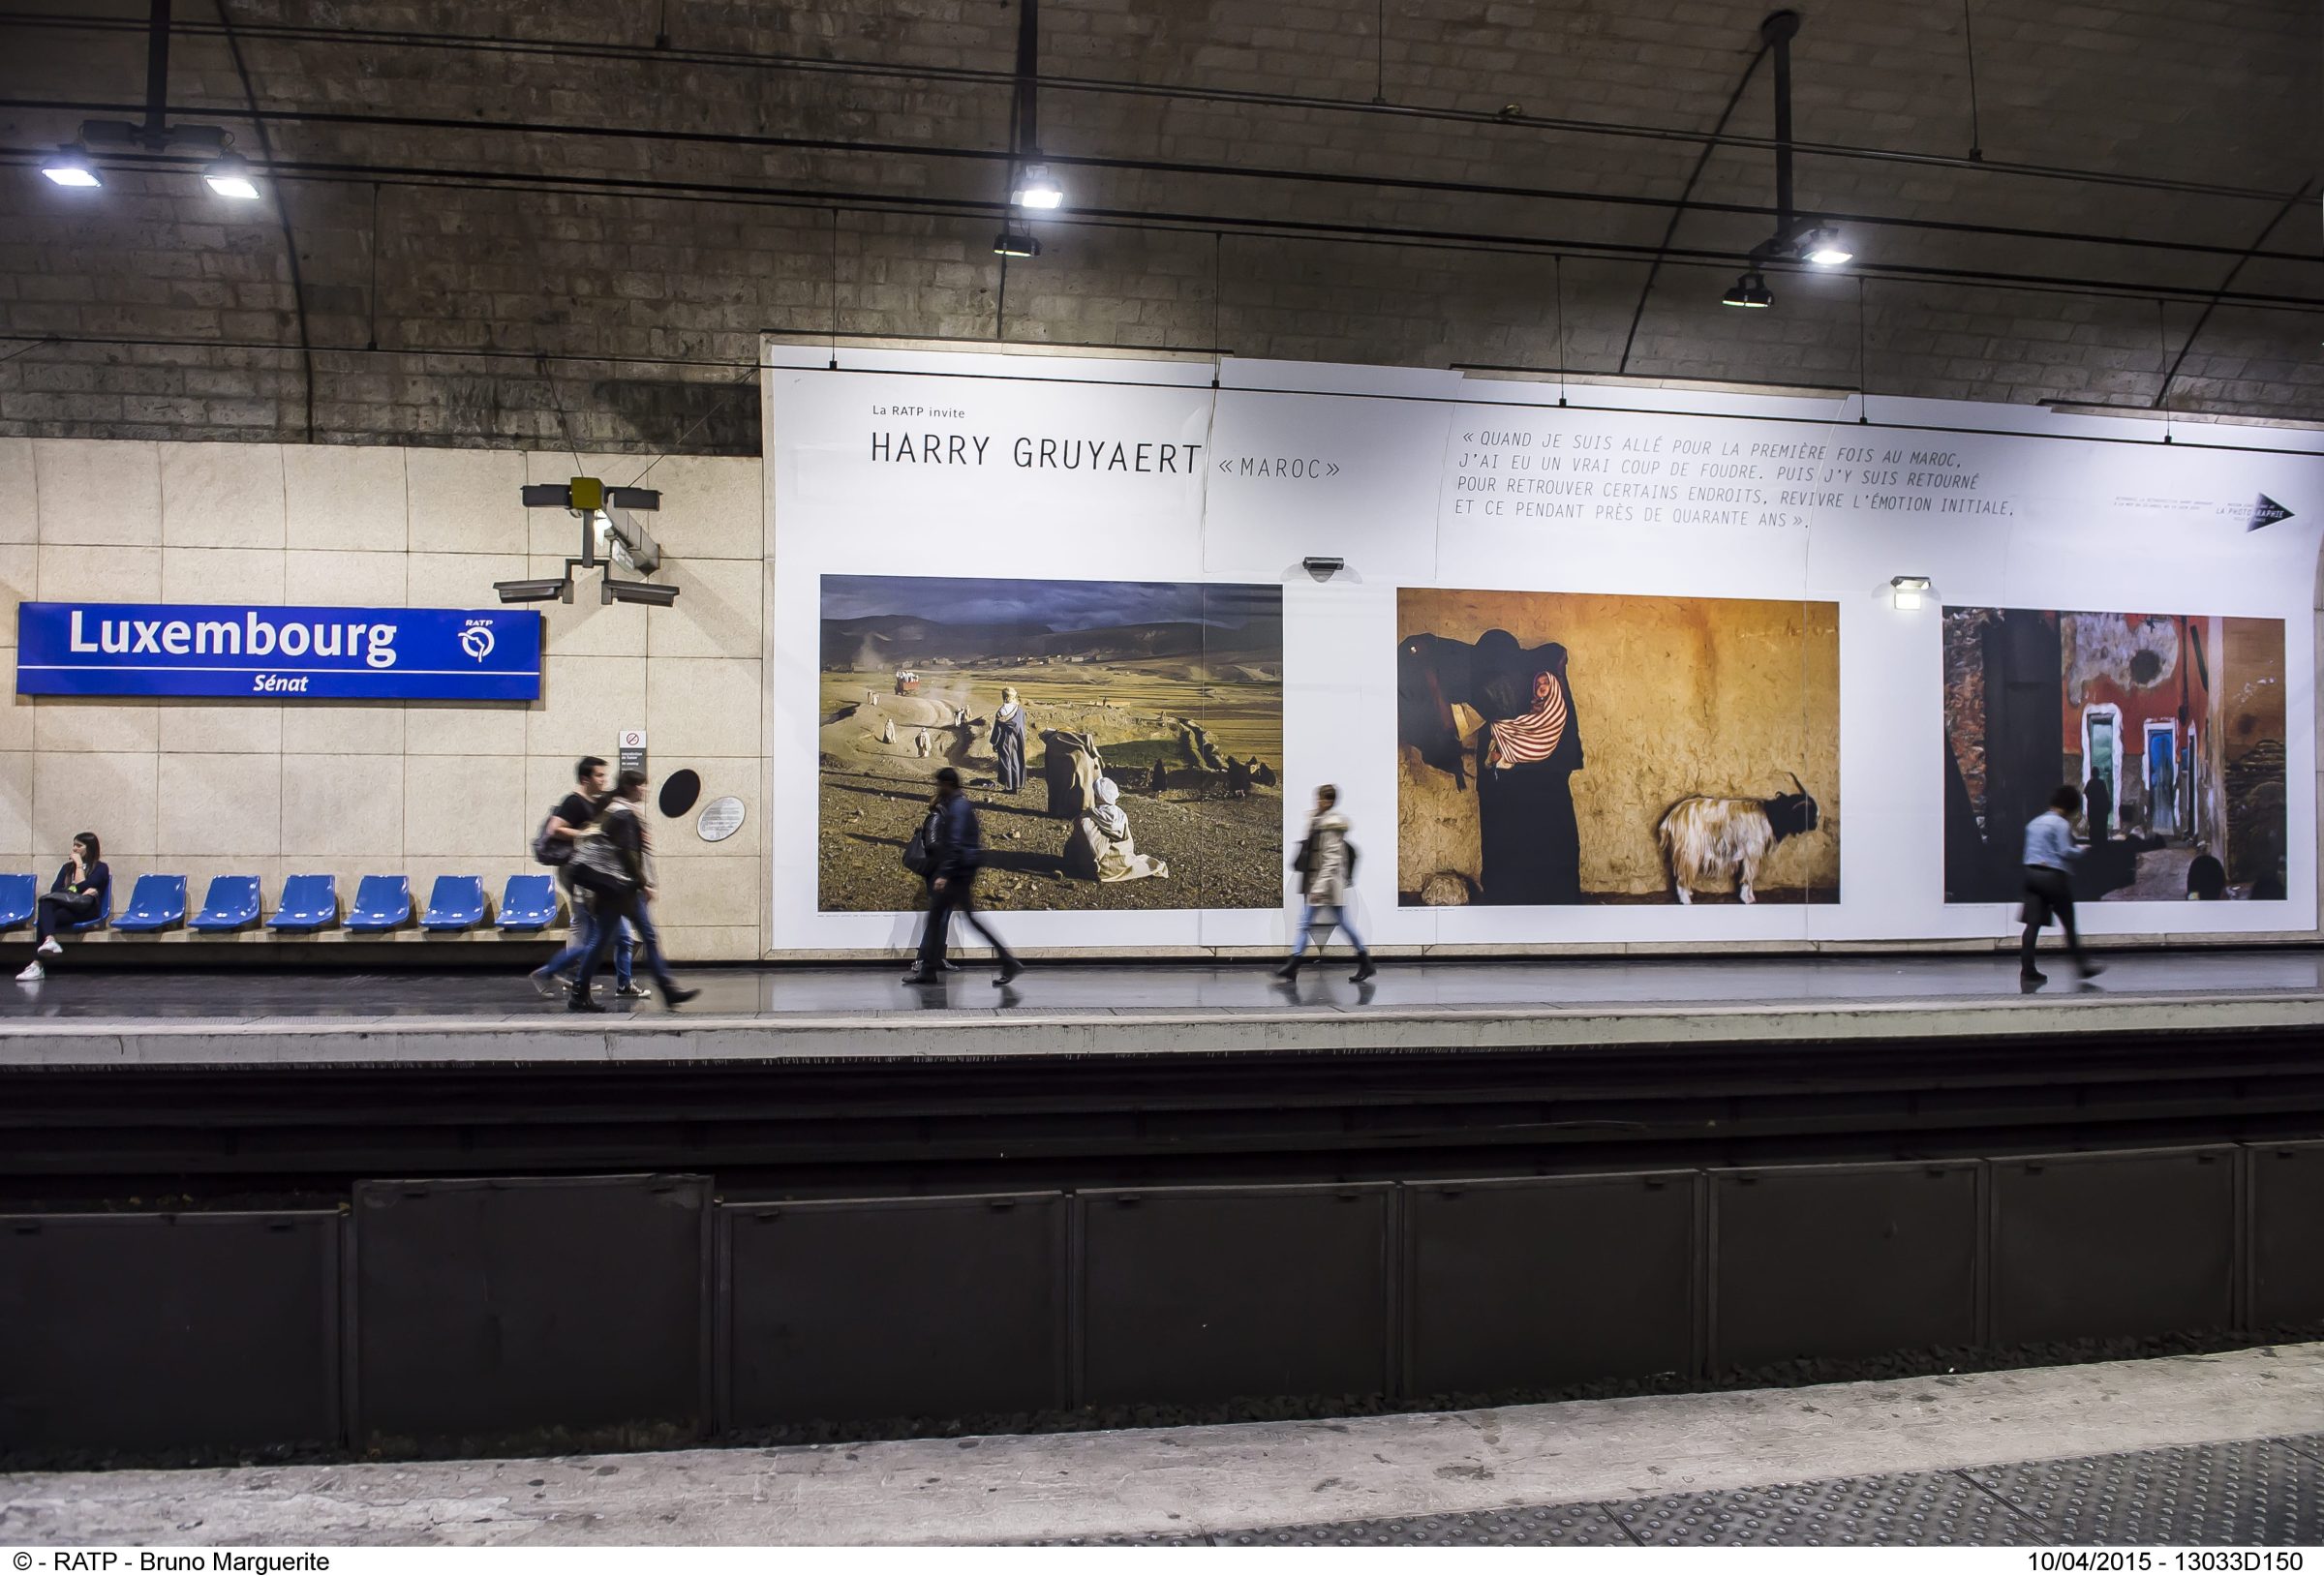 Harry Gruyaert dans le métro parisien